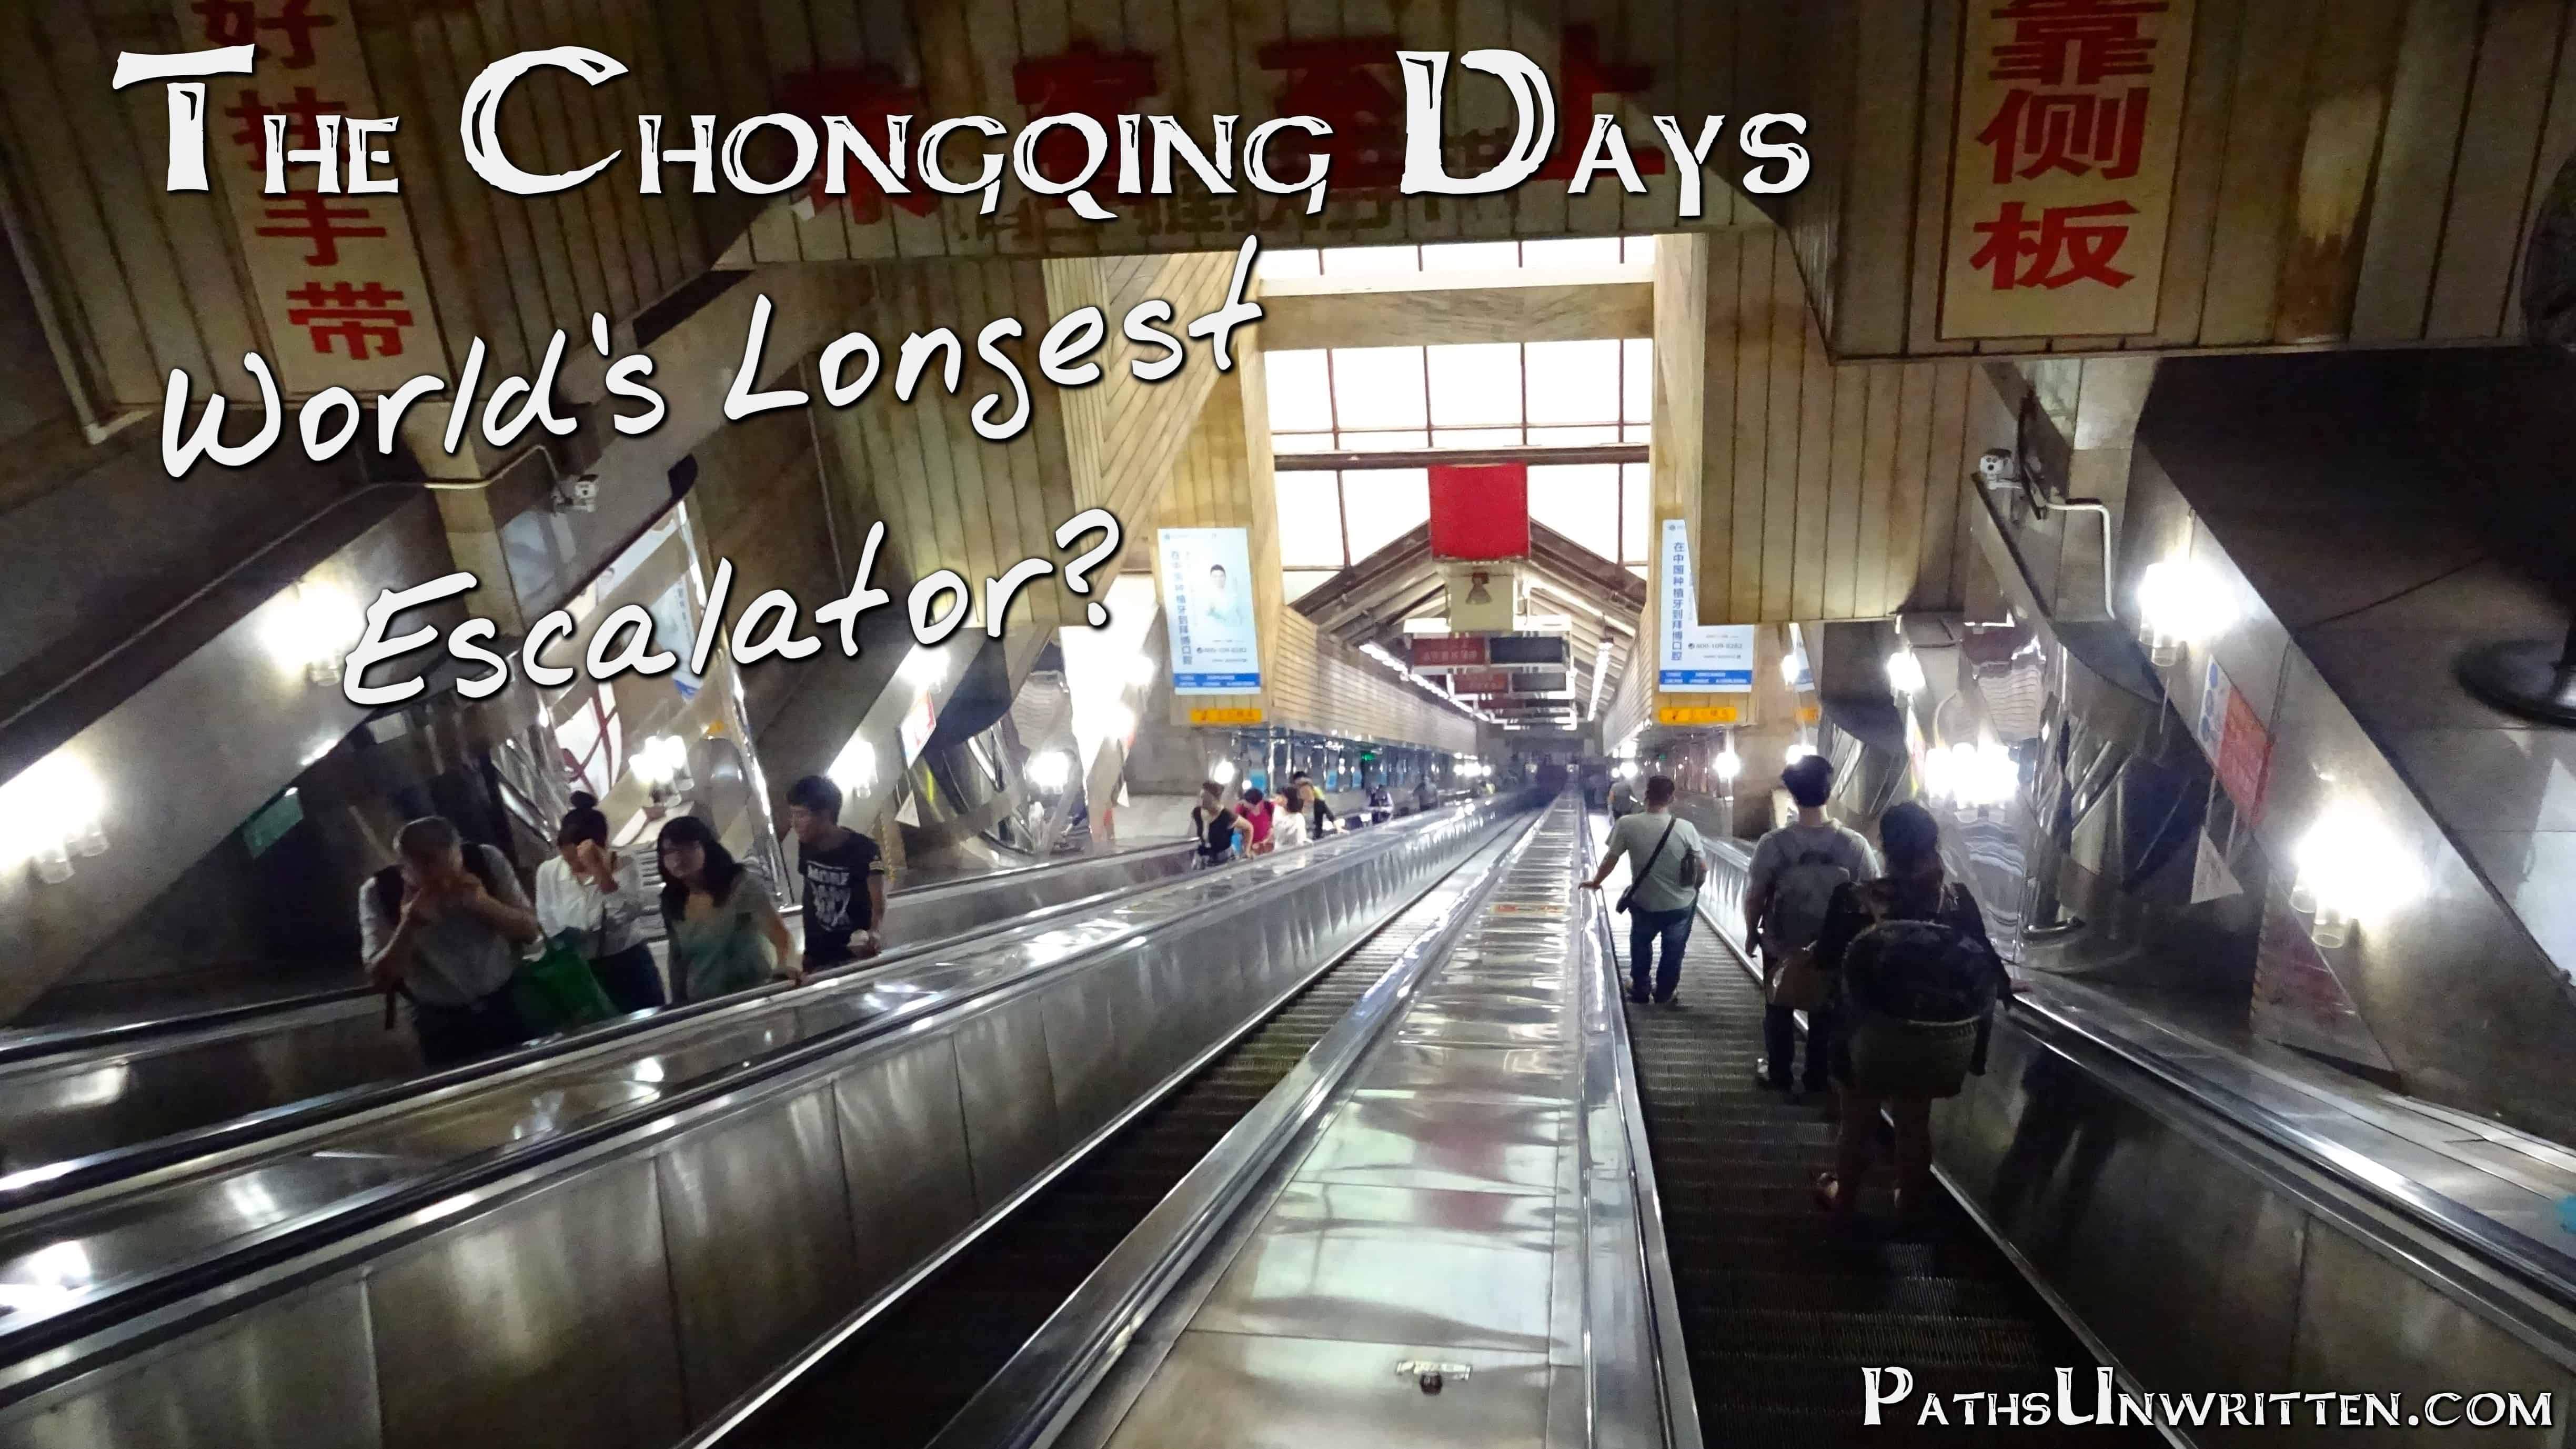 The Chongqing Days:  World’s Longest Escalator?